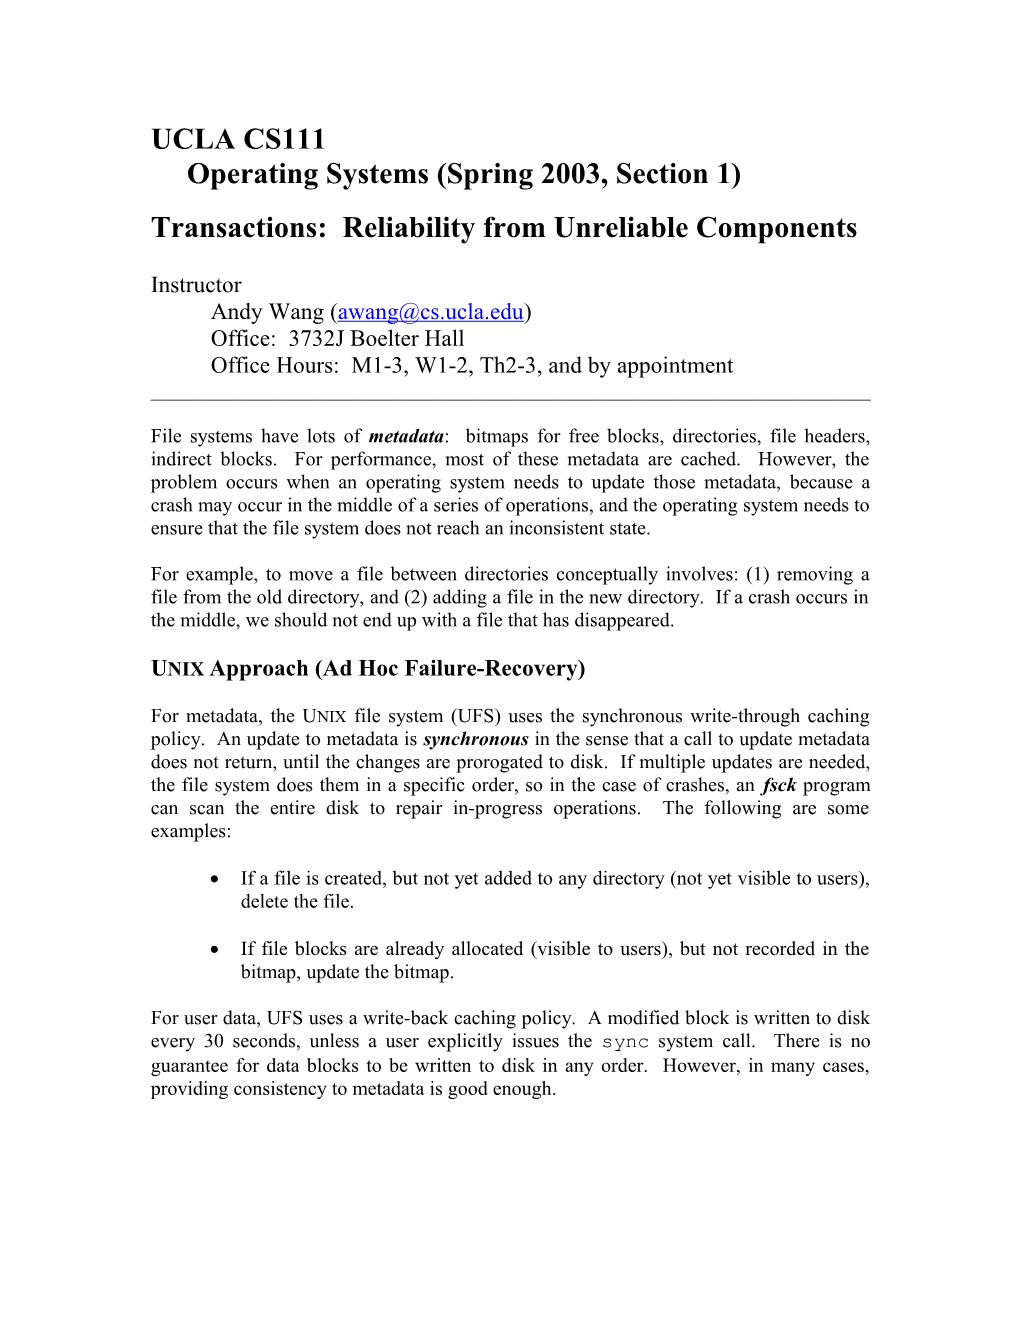 CS111 Operating System Principles s2